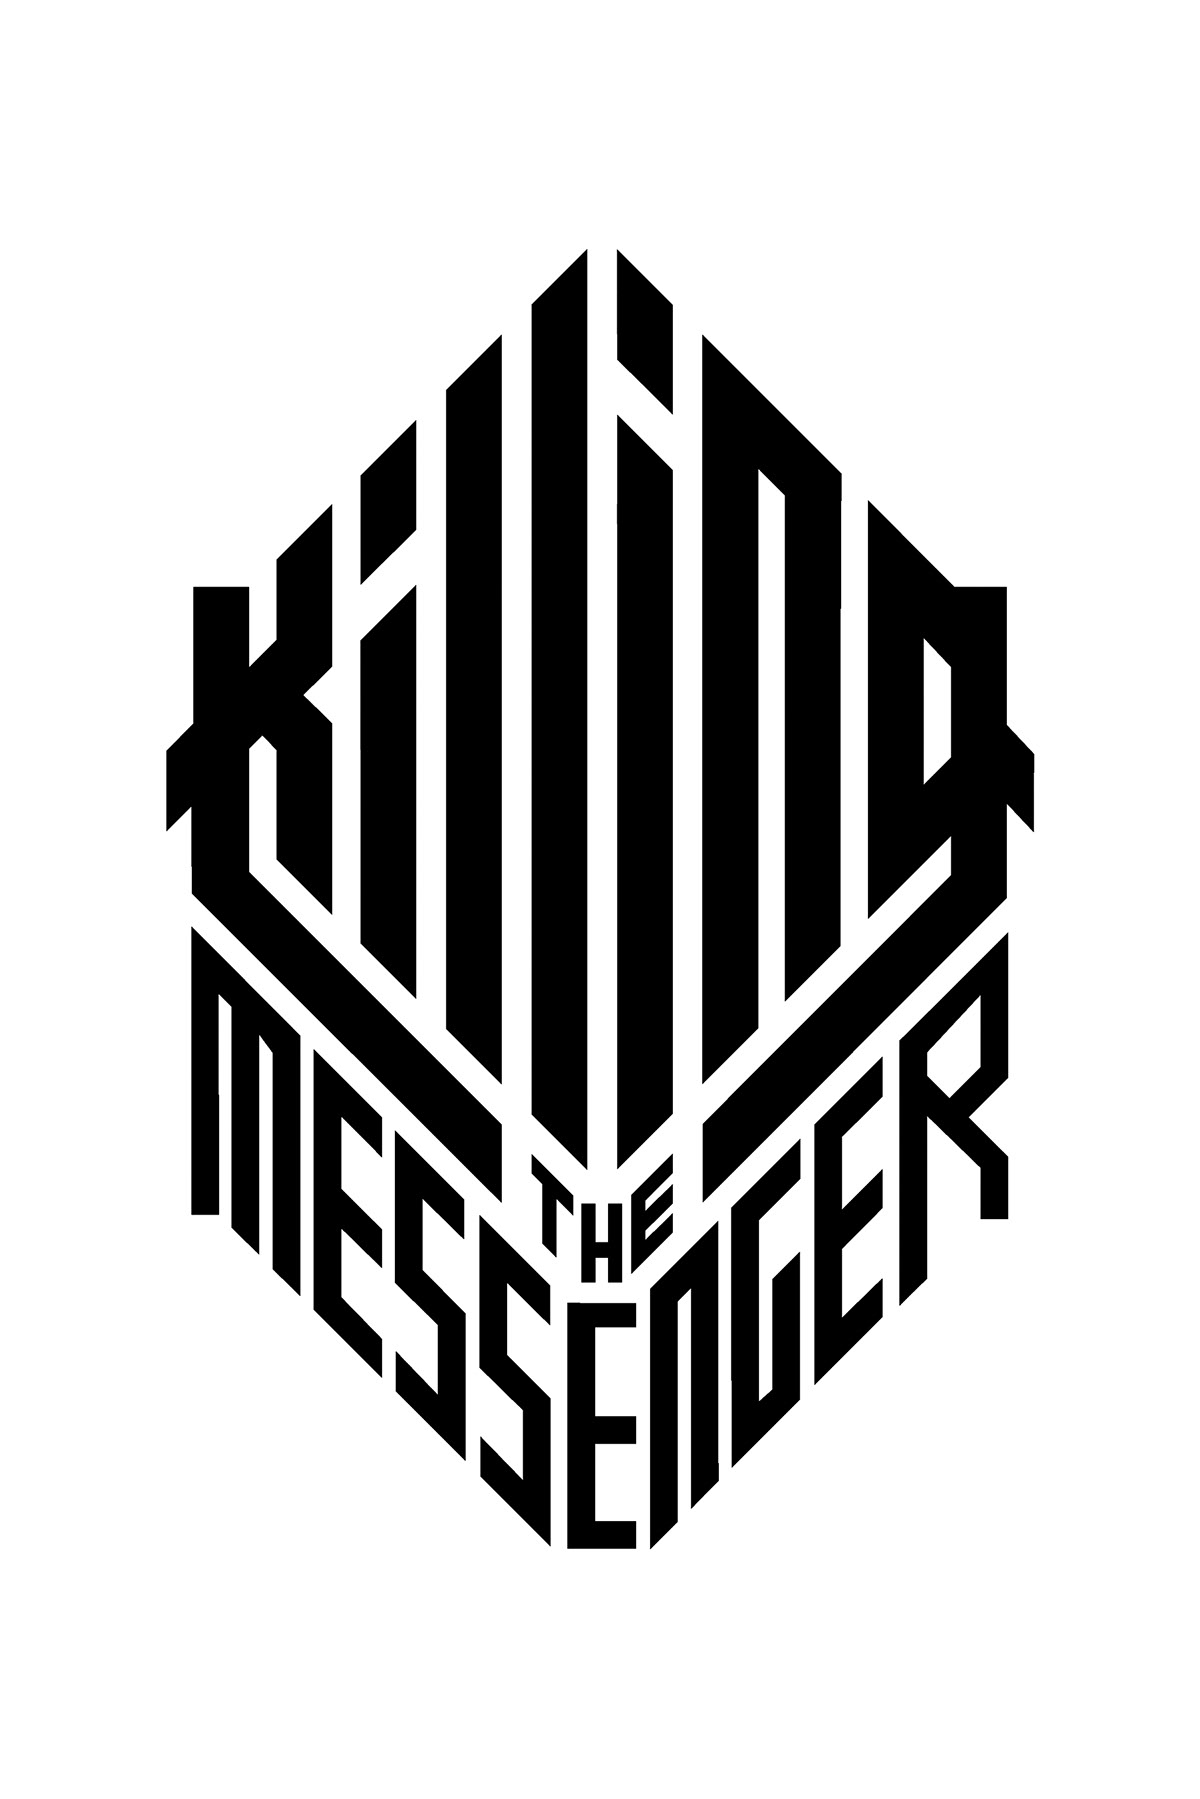 Adobe Portfolio killing the messenger band band design logo zombie shirt design concert Vans Warped Tour apparel